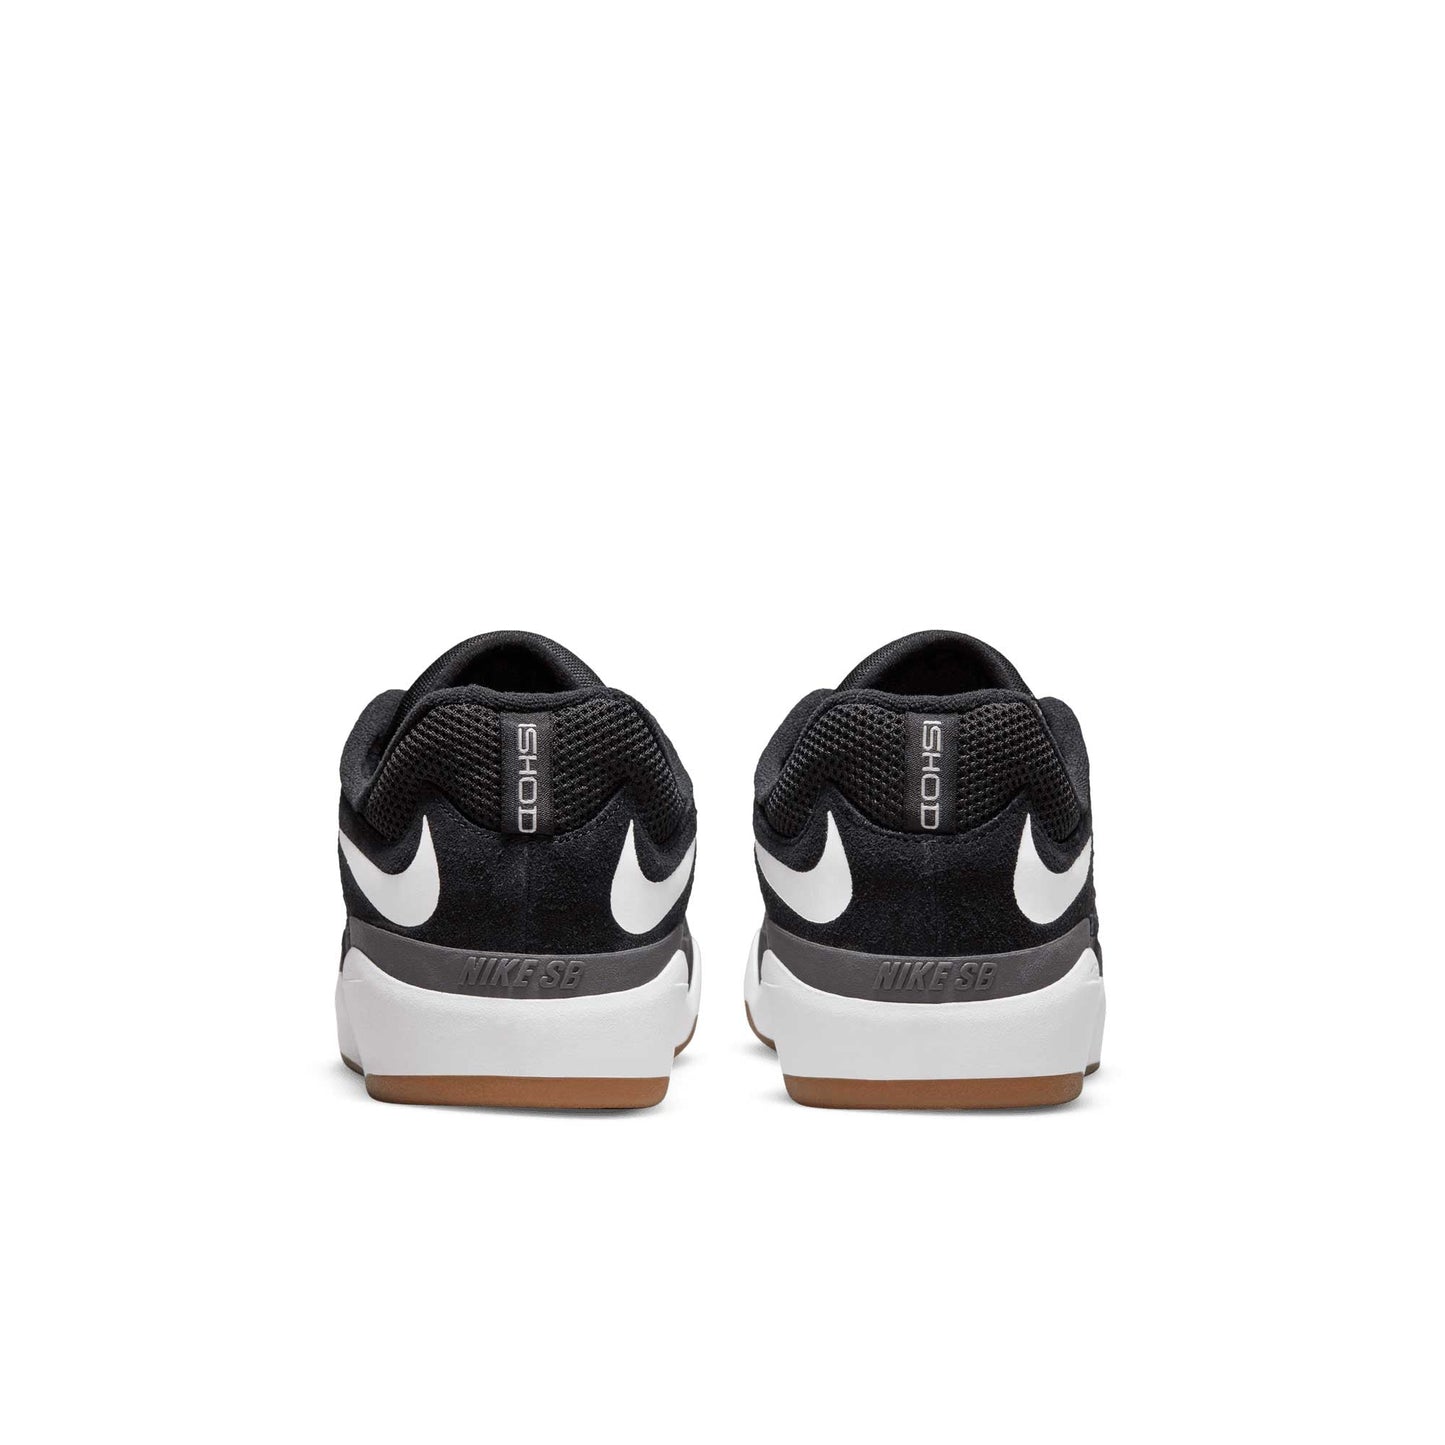 Nike SB Ishod Wair, black/white-dark grey-black - Tiki Room Skateboards - 7